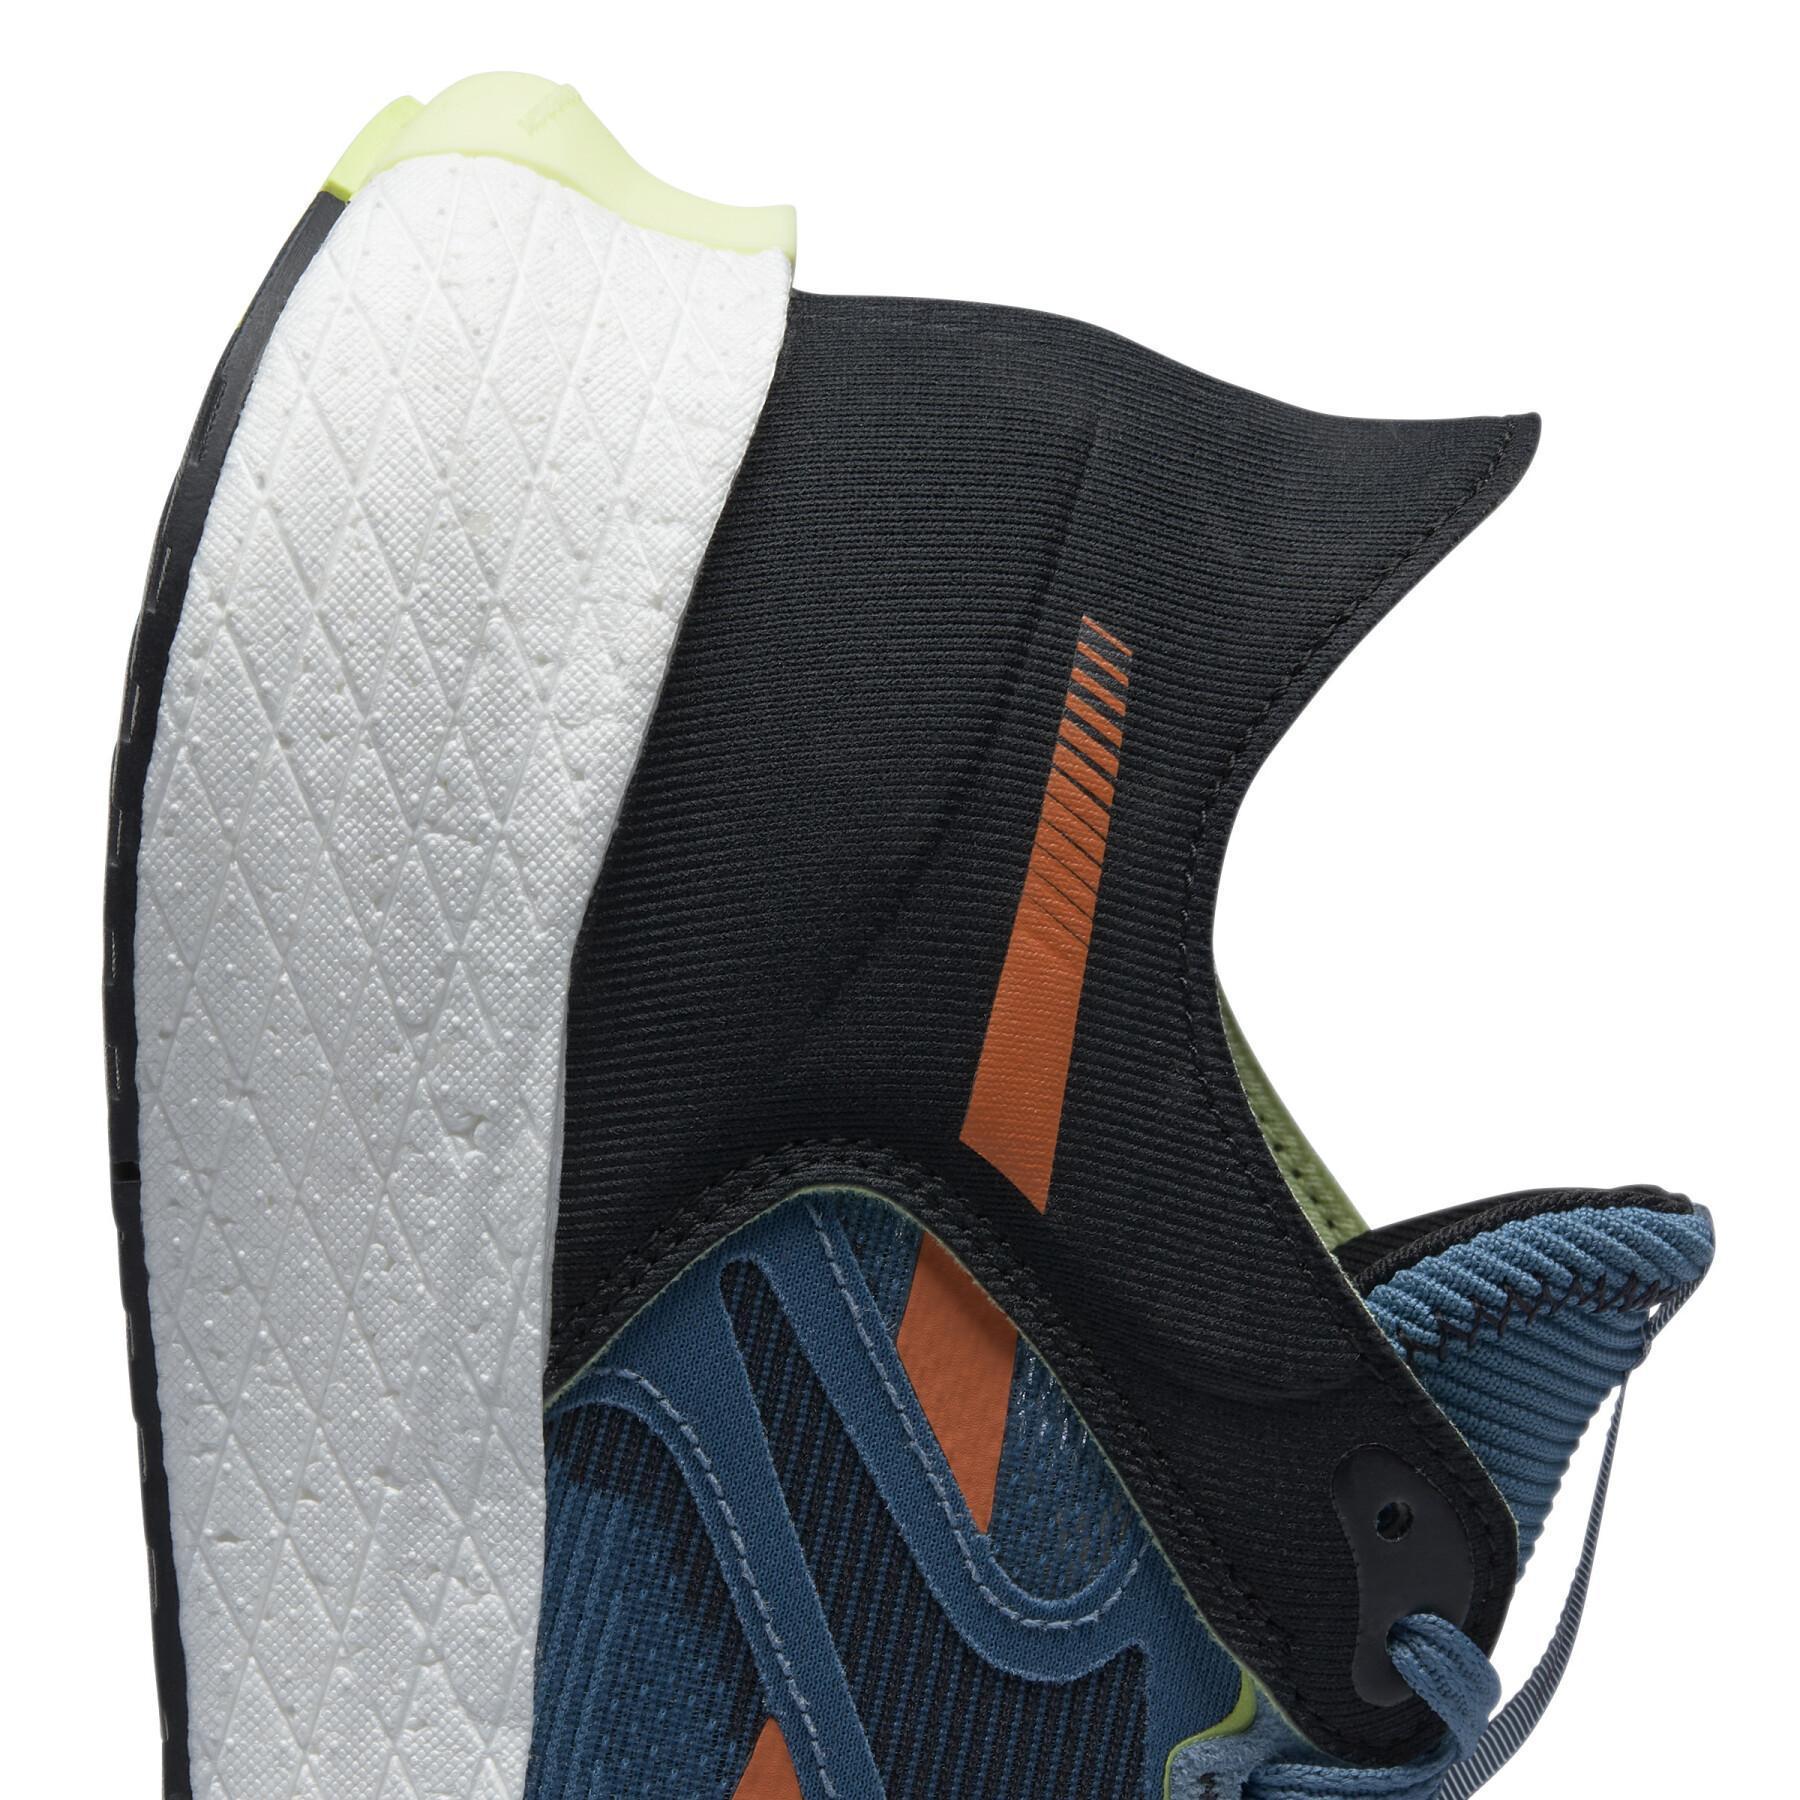 Sapatos de running Reebok Floatride Energy Symmetros 2